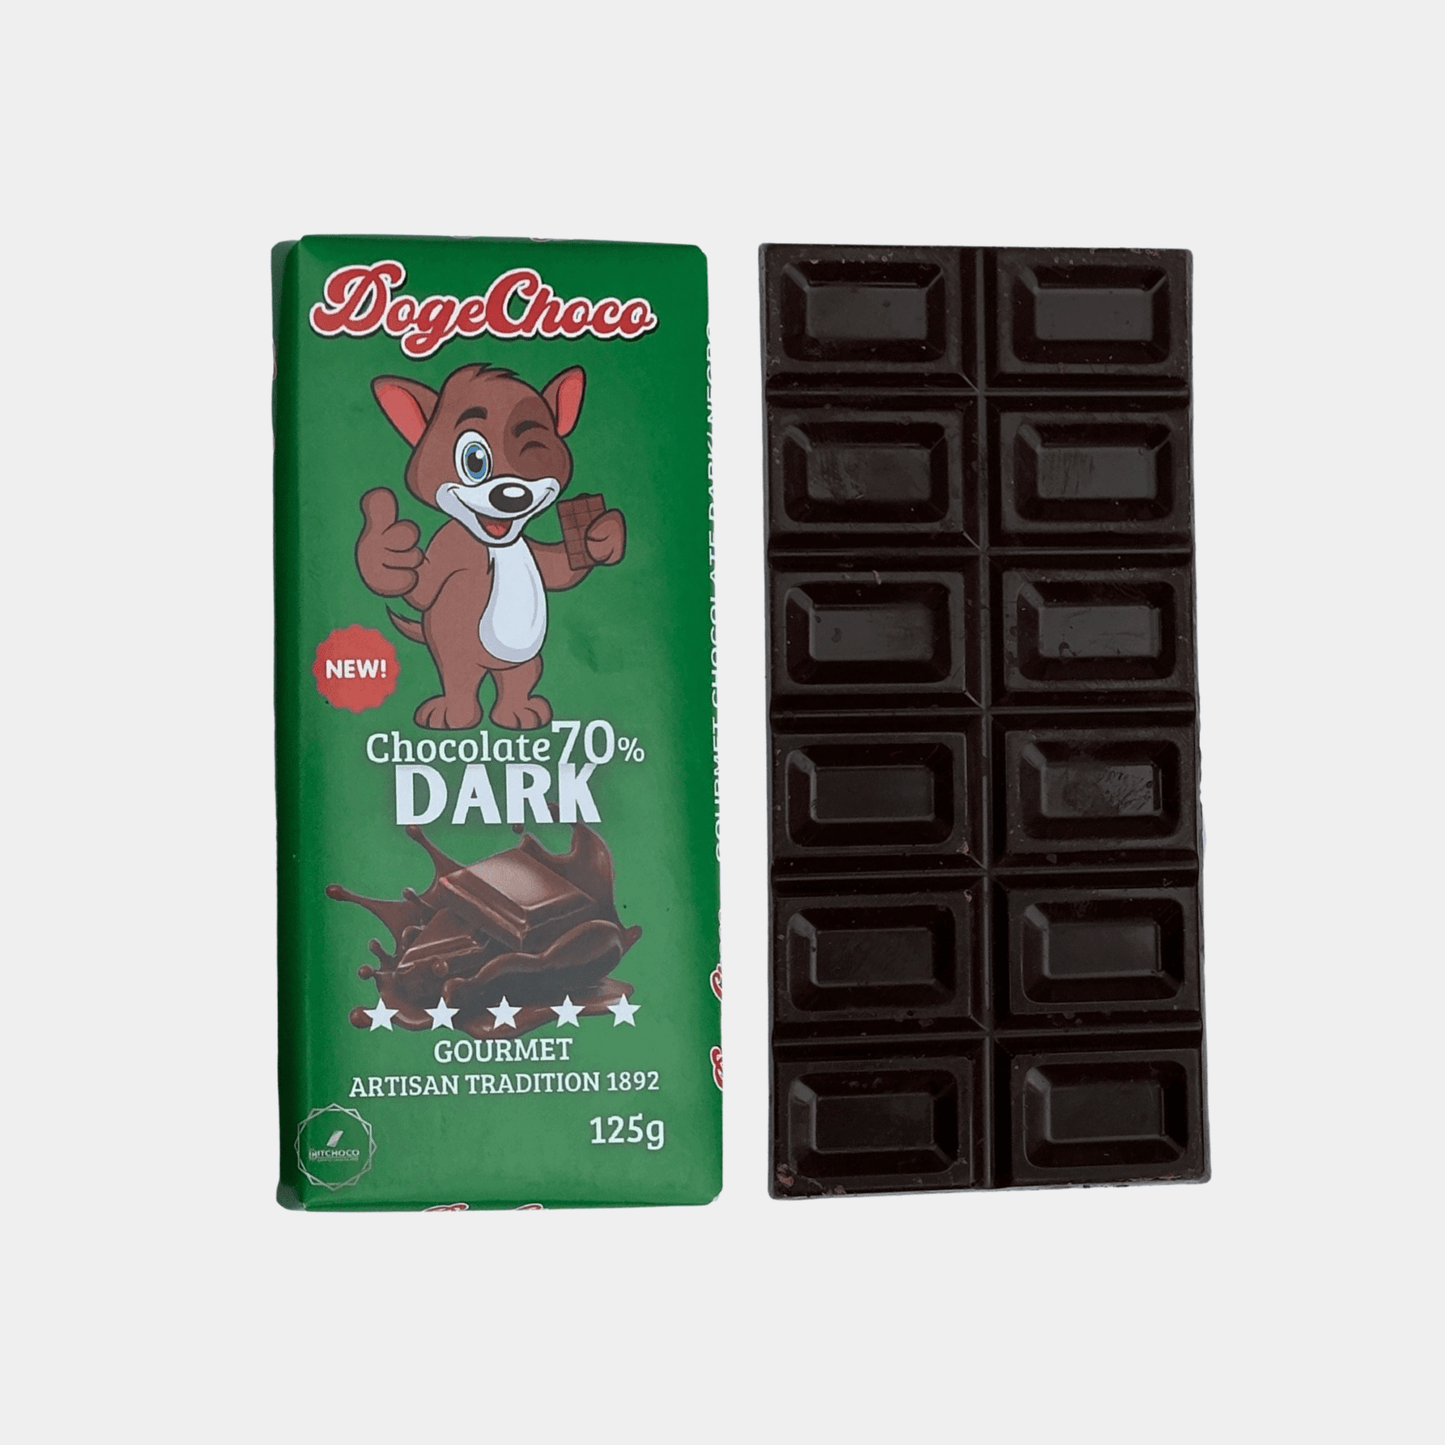 Crypto Chocolate negro 70% Cacao Gourmet Artesano  125G Dogechoco